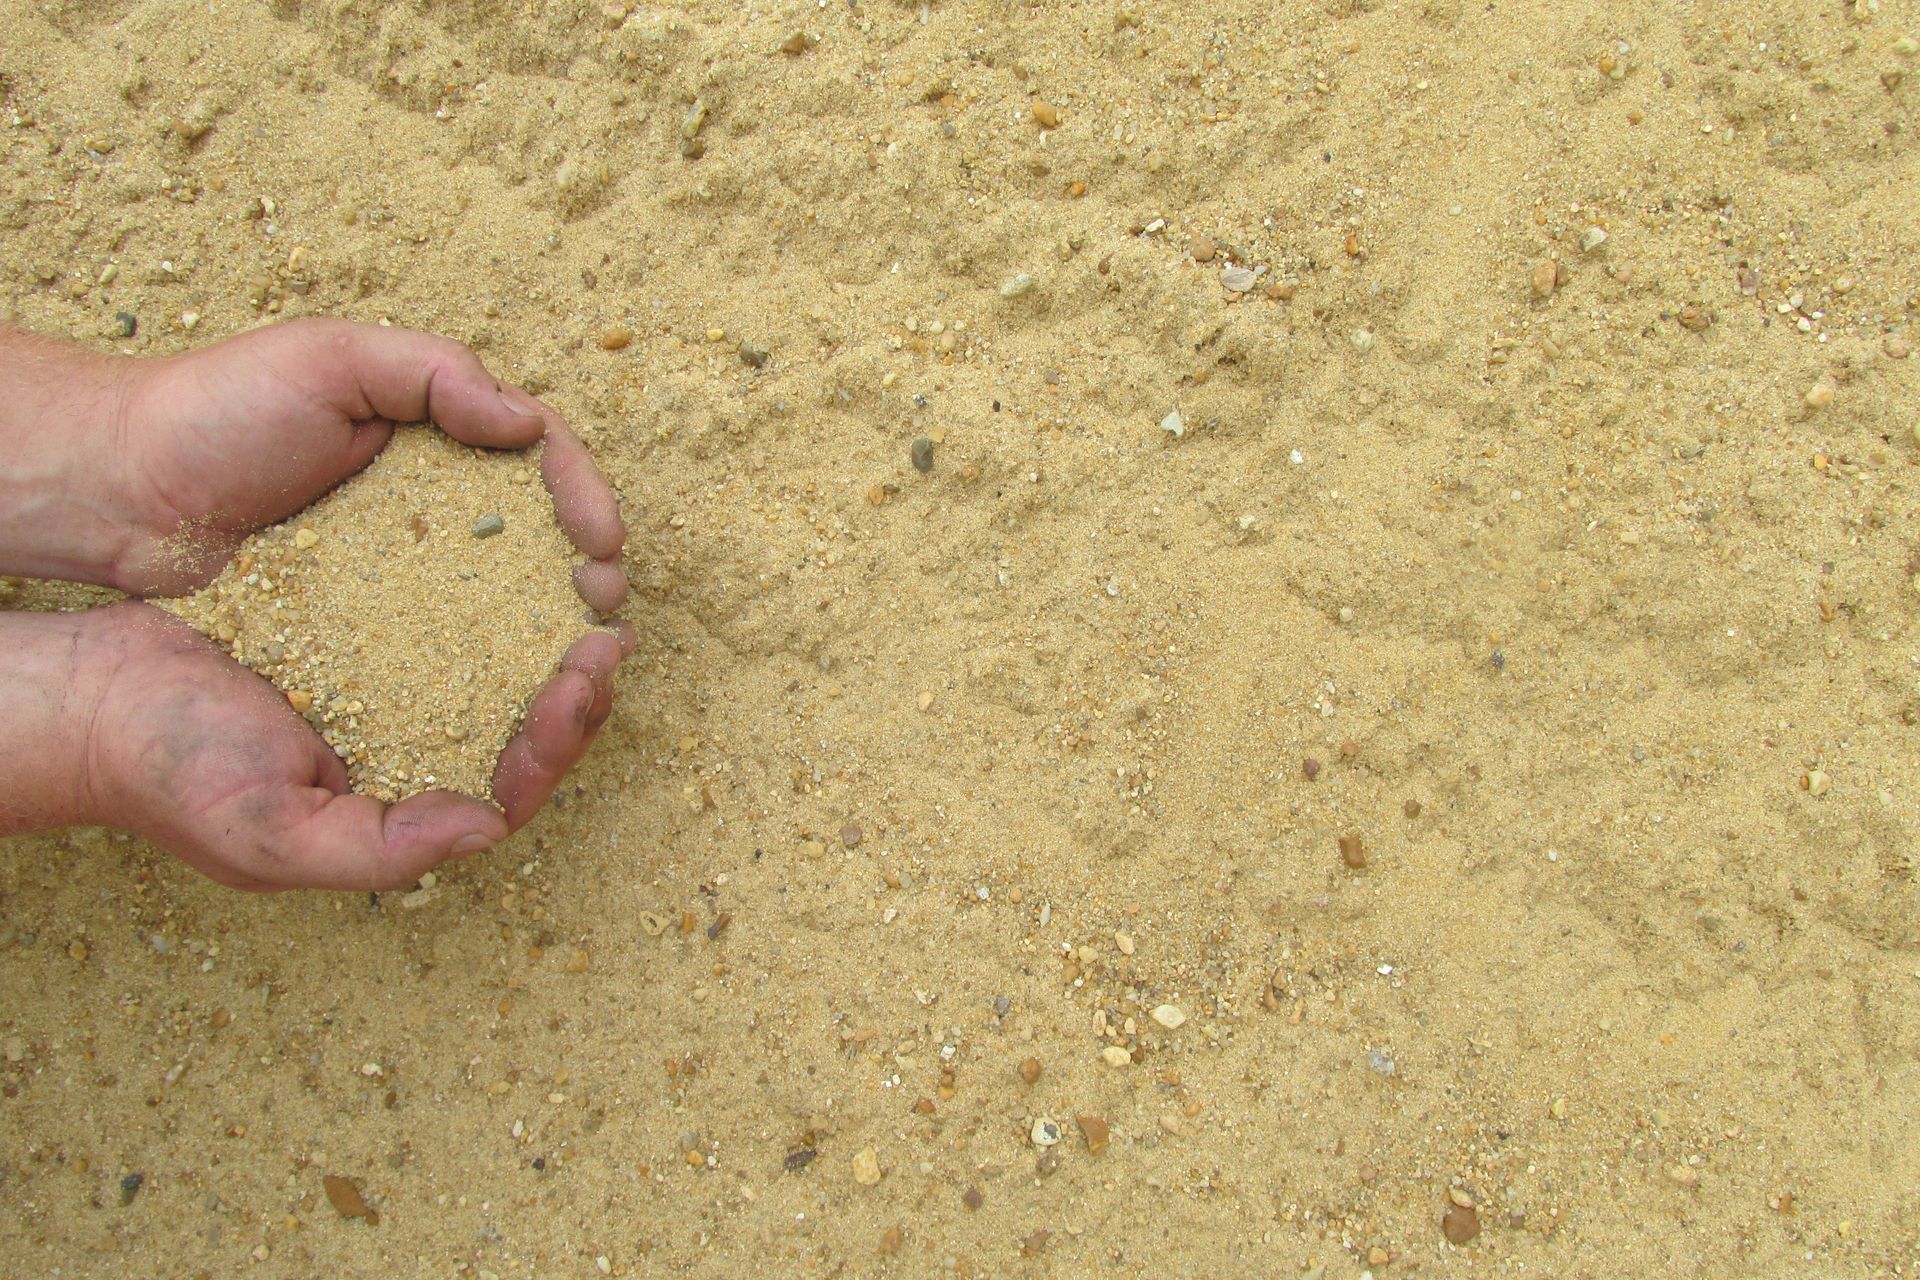 Bulk Mason Sand for Sale in Lebanon PA. We deliver sand to Lebanon, Annville, Palmyra, & Cornwall.